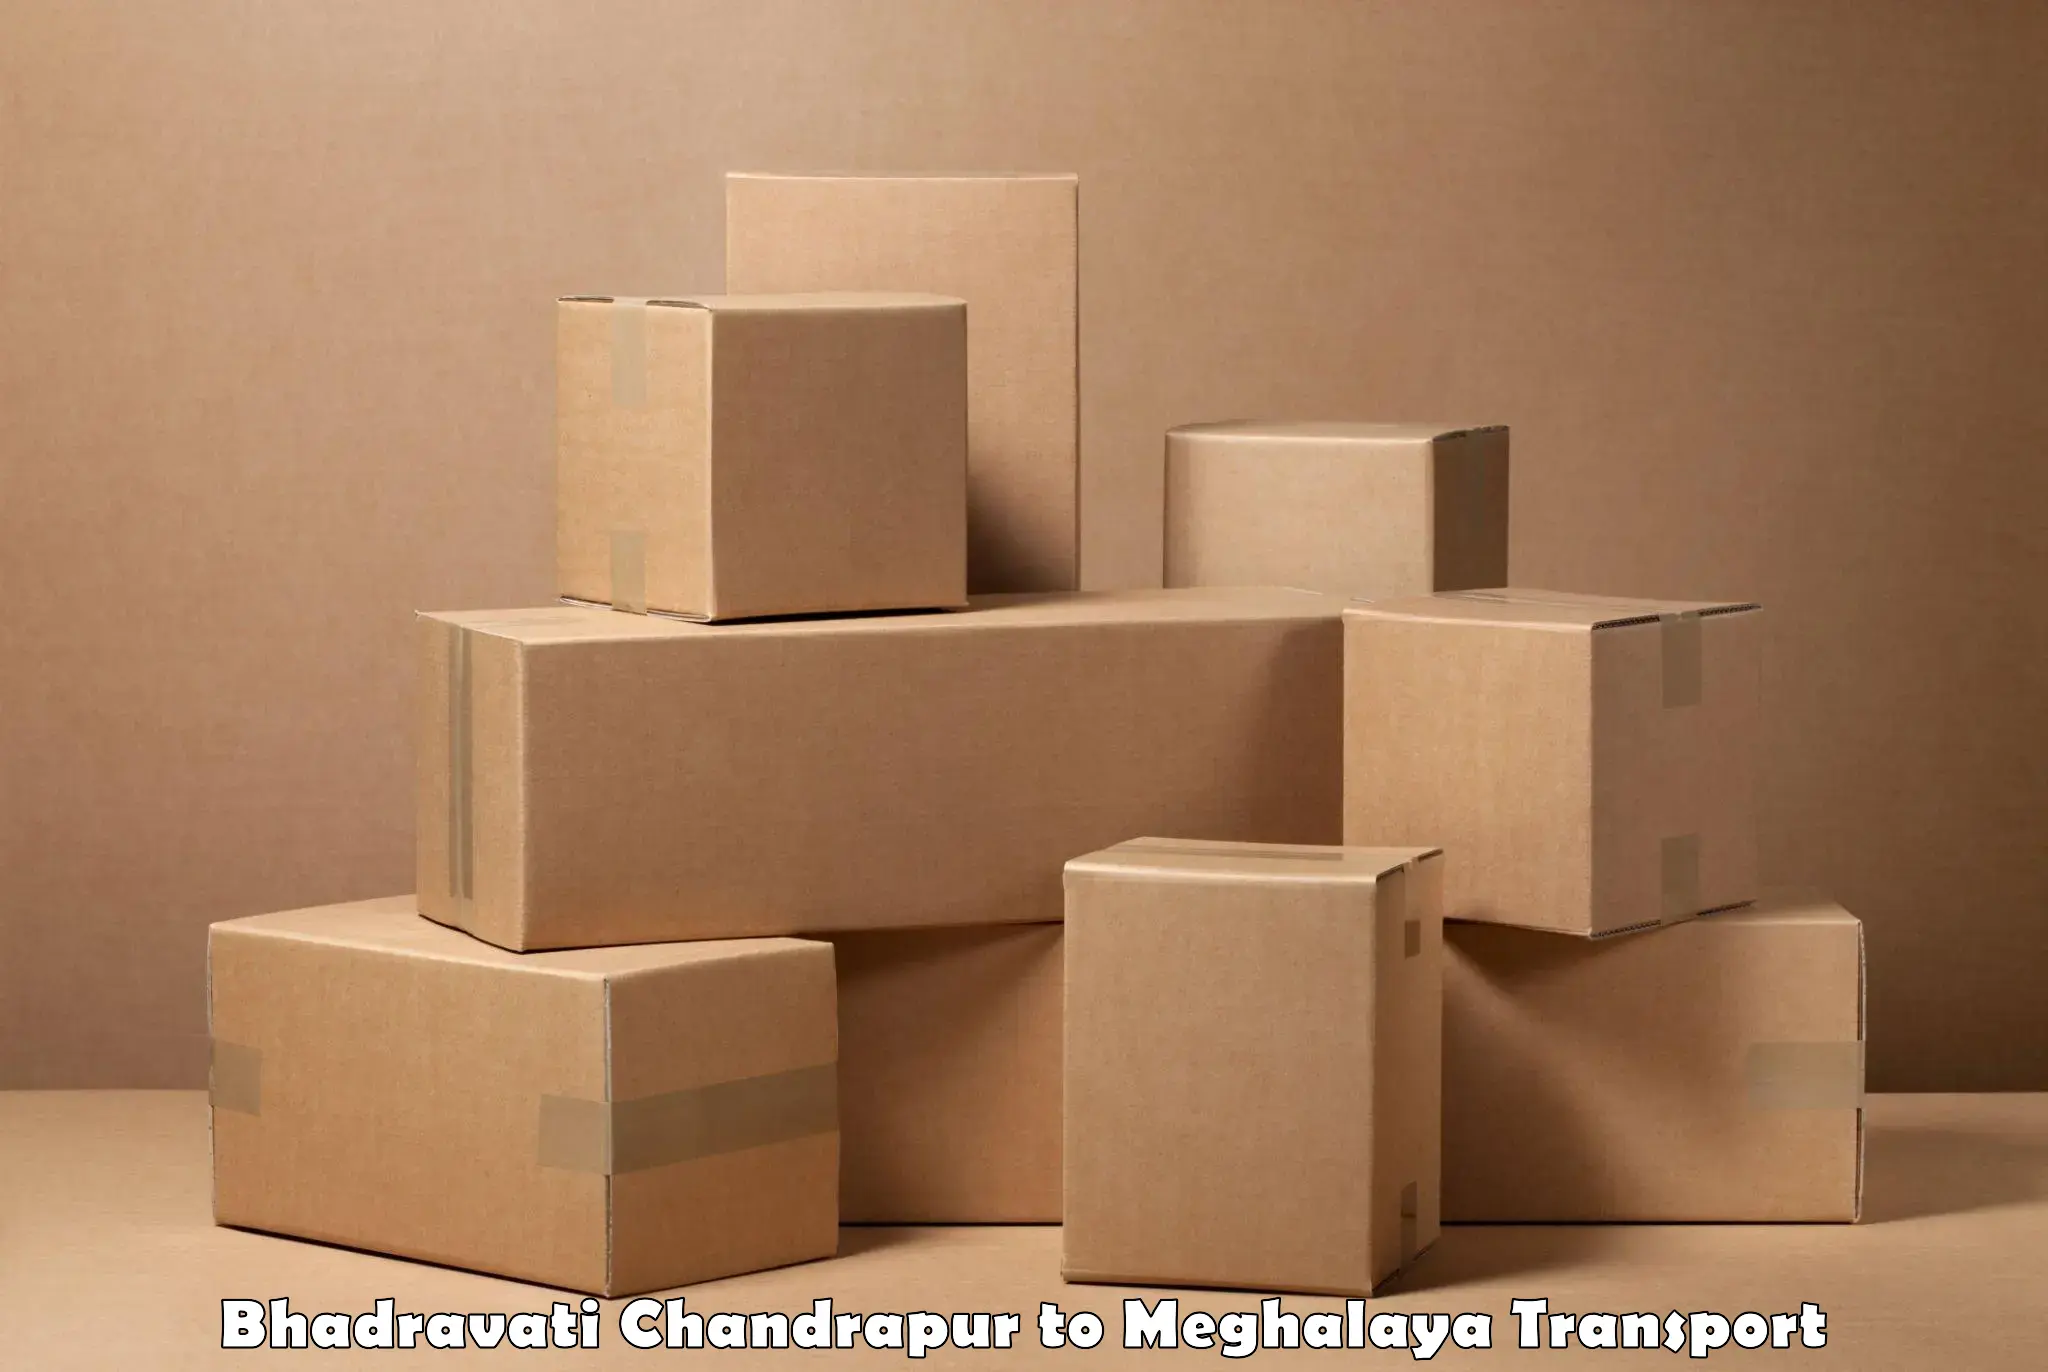 Truck transport companies in India Bhadravati Chandrapur to Umsaw